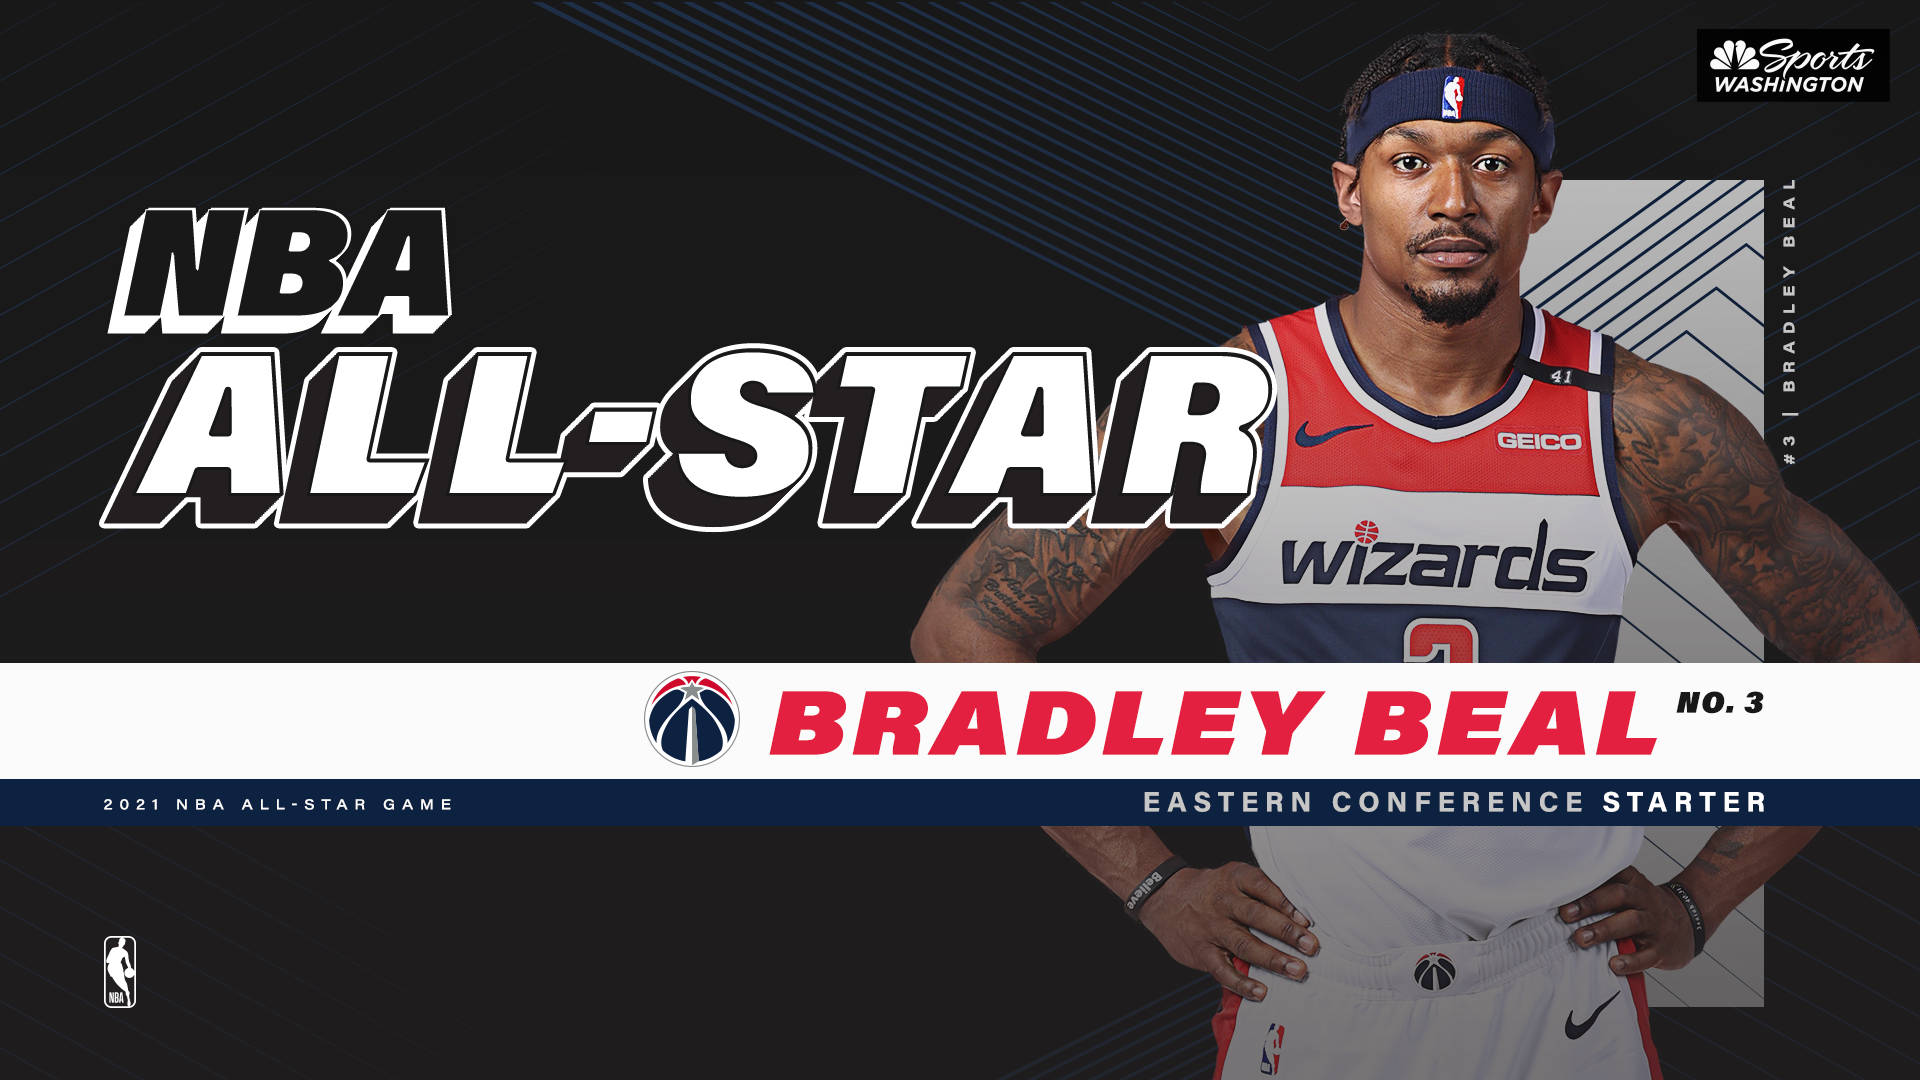 Bradley Beal Nba All-star Player Background